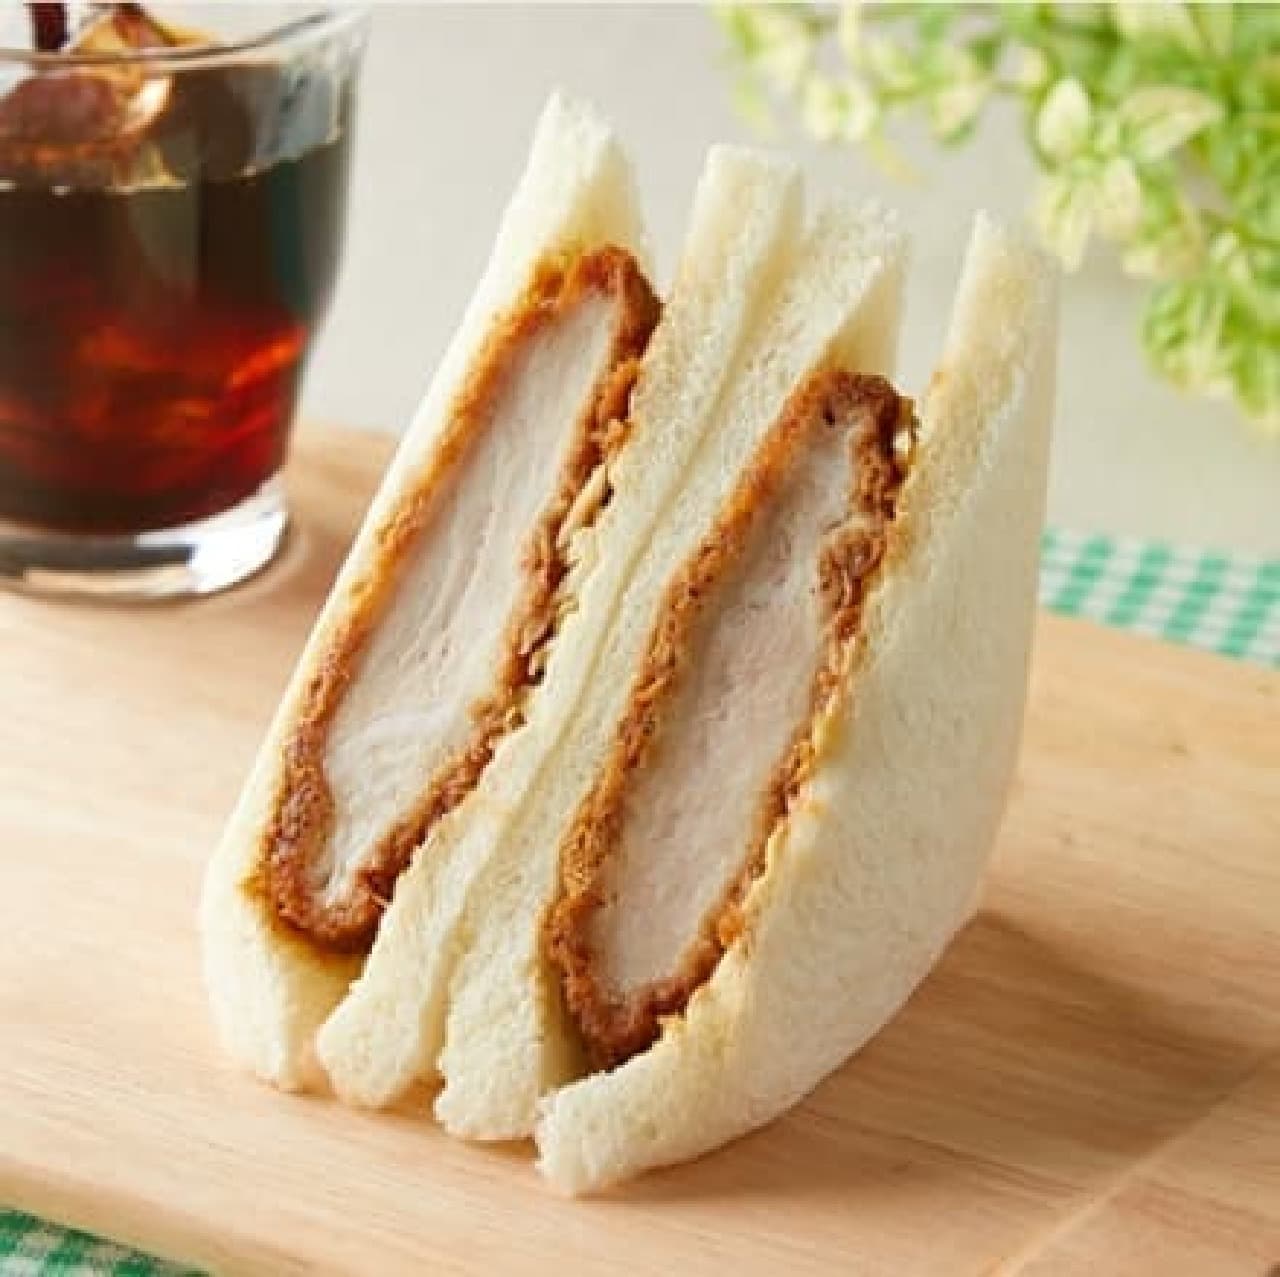 FamilyMart "Thick sliced loin cutlet sandwich"